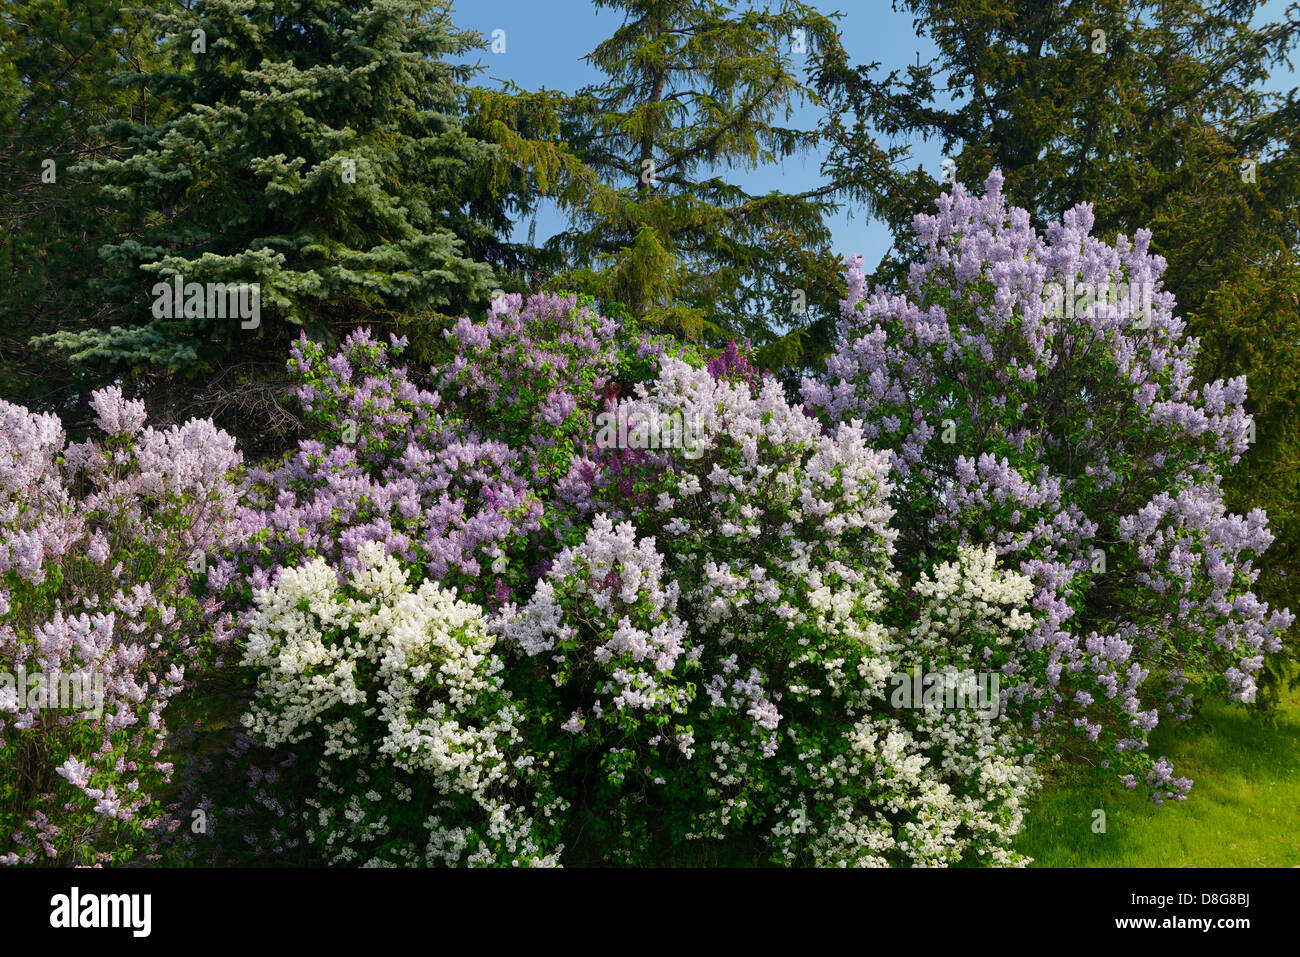 A púrpura, blanco común de arbustos de lilas floración en primavera abetos junto a Toronto, Canadá Foto de stock